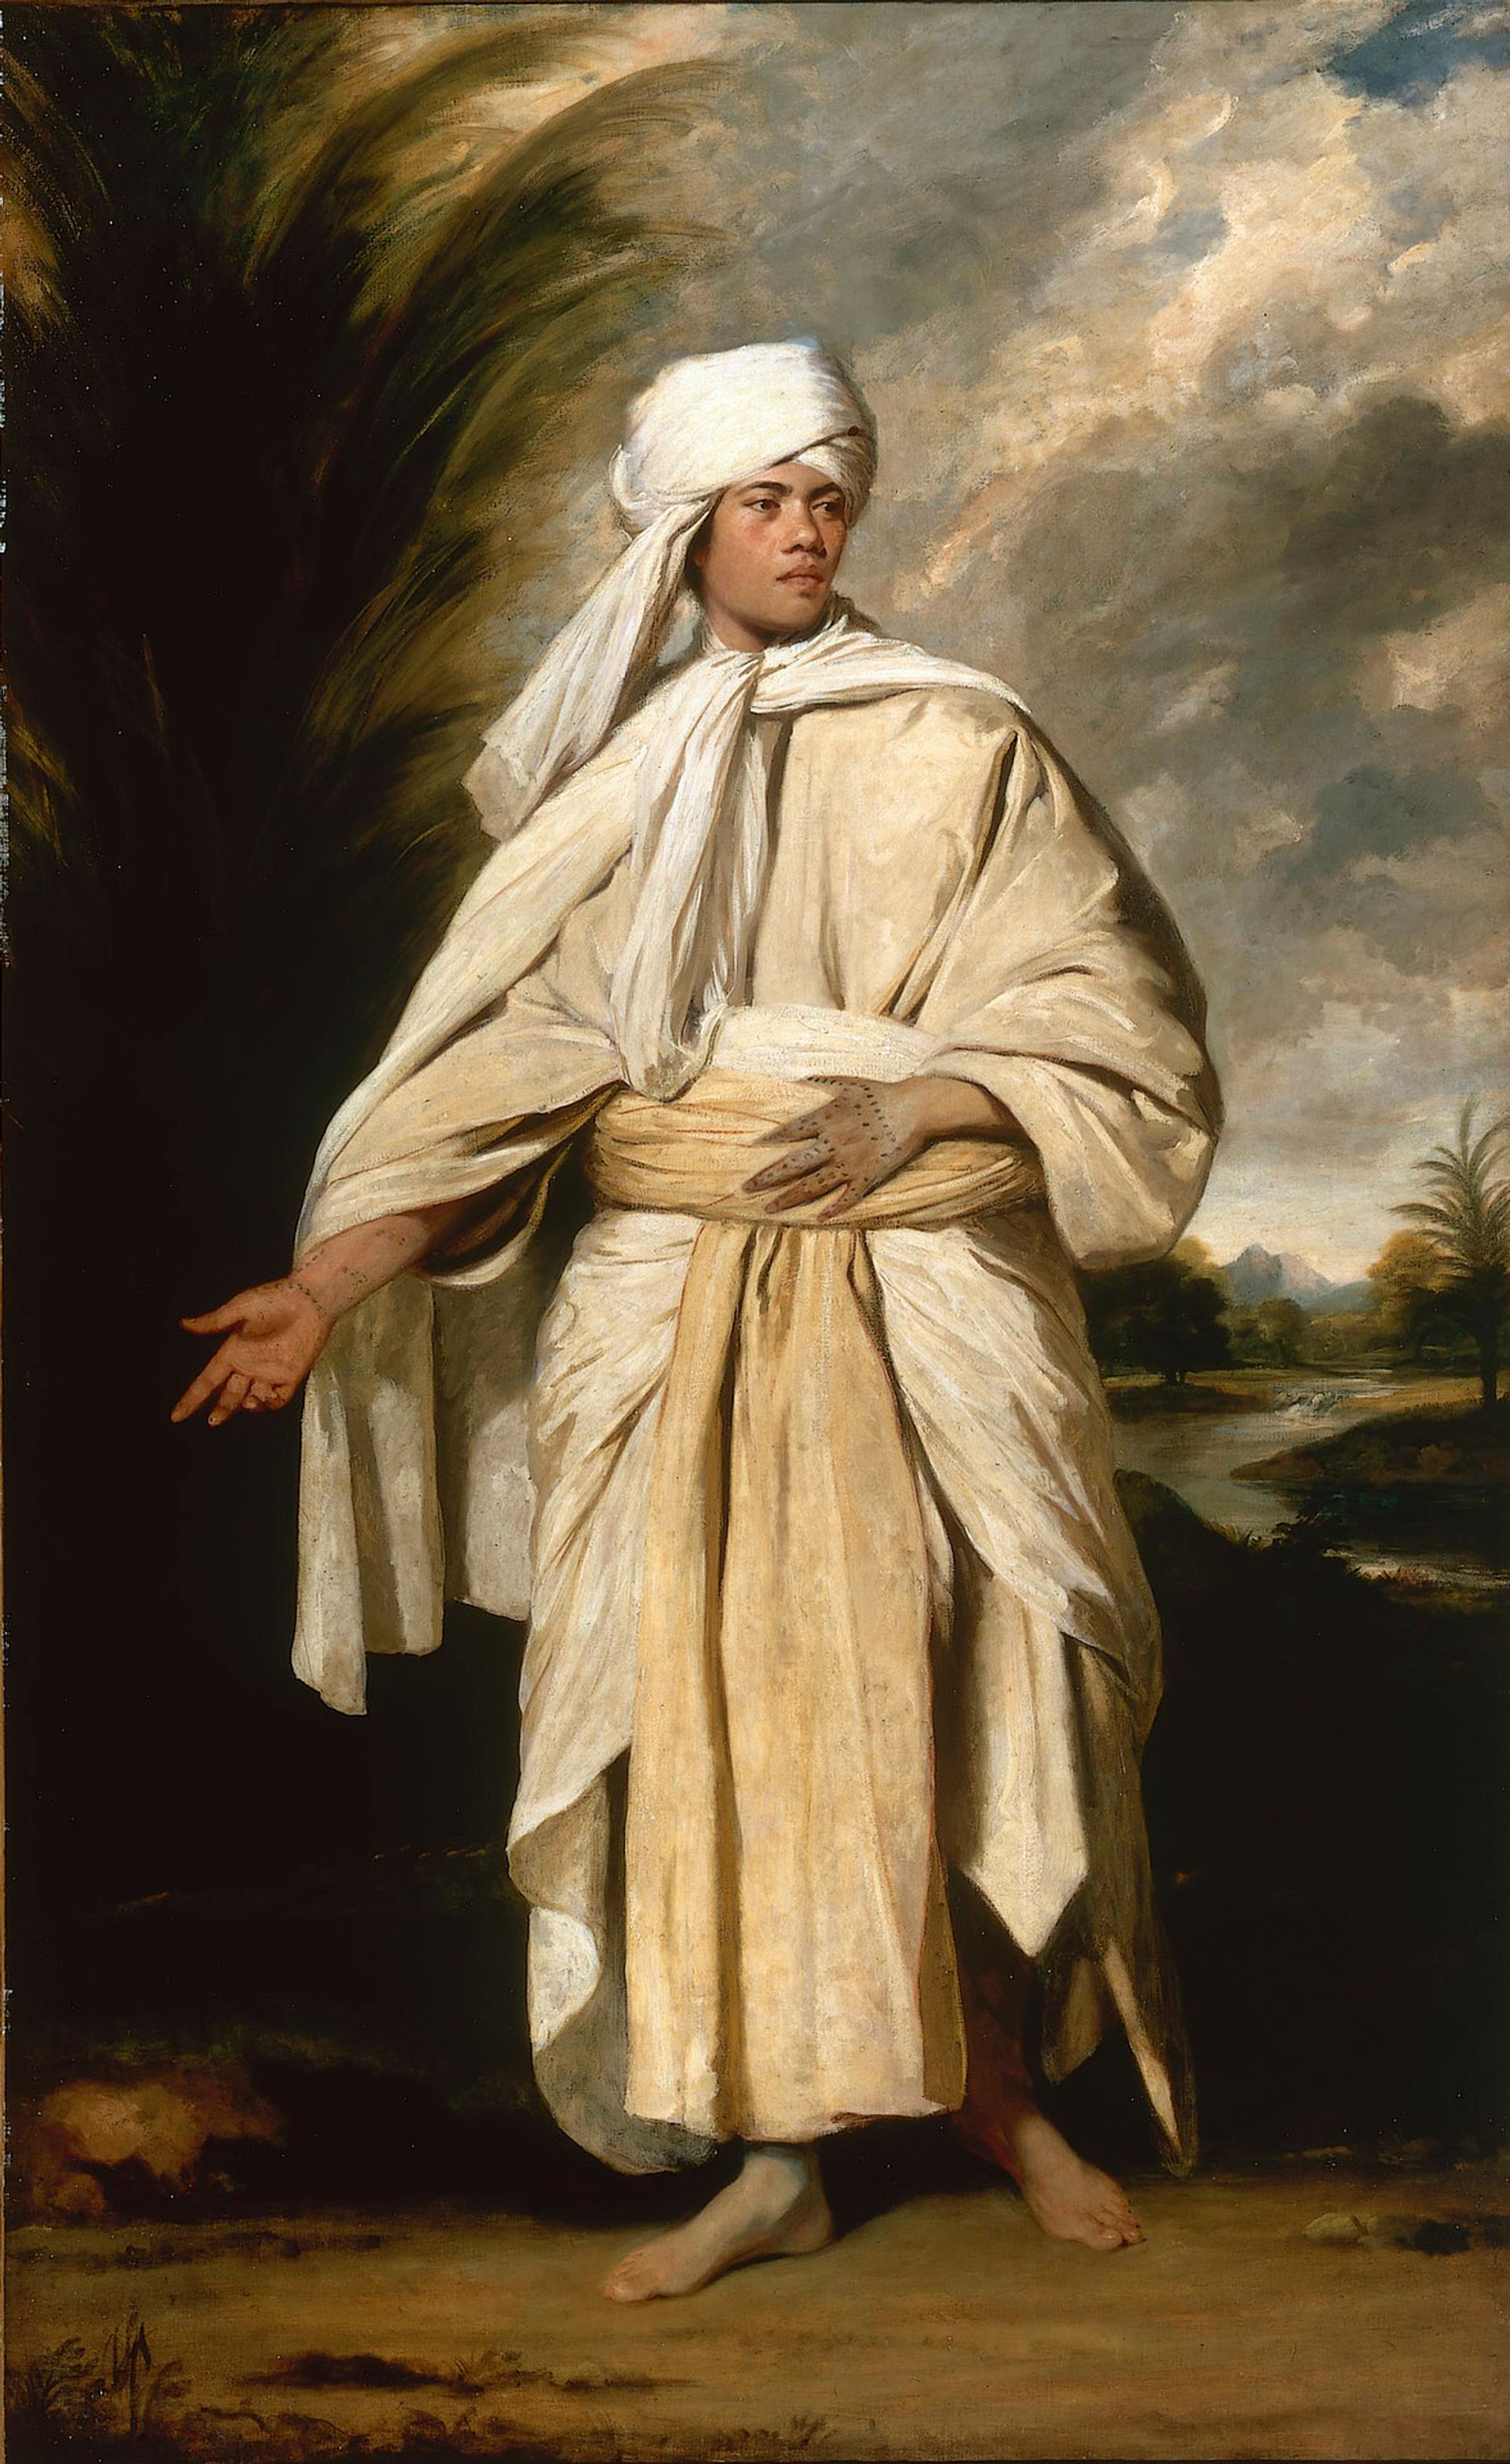 Joshua Reynolds, Portrait of Omai (around 1776) Wikimedia Commons